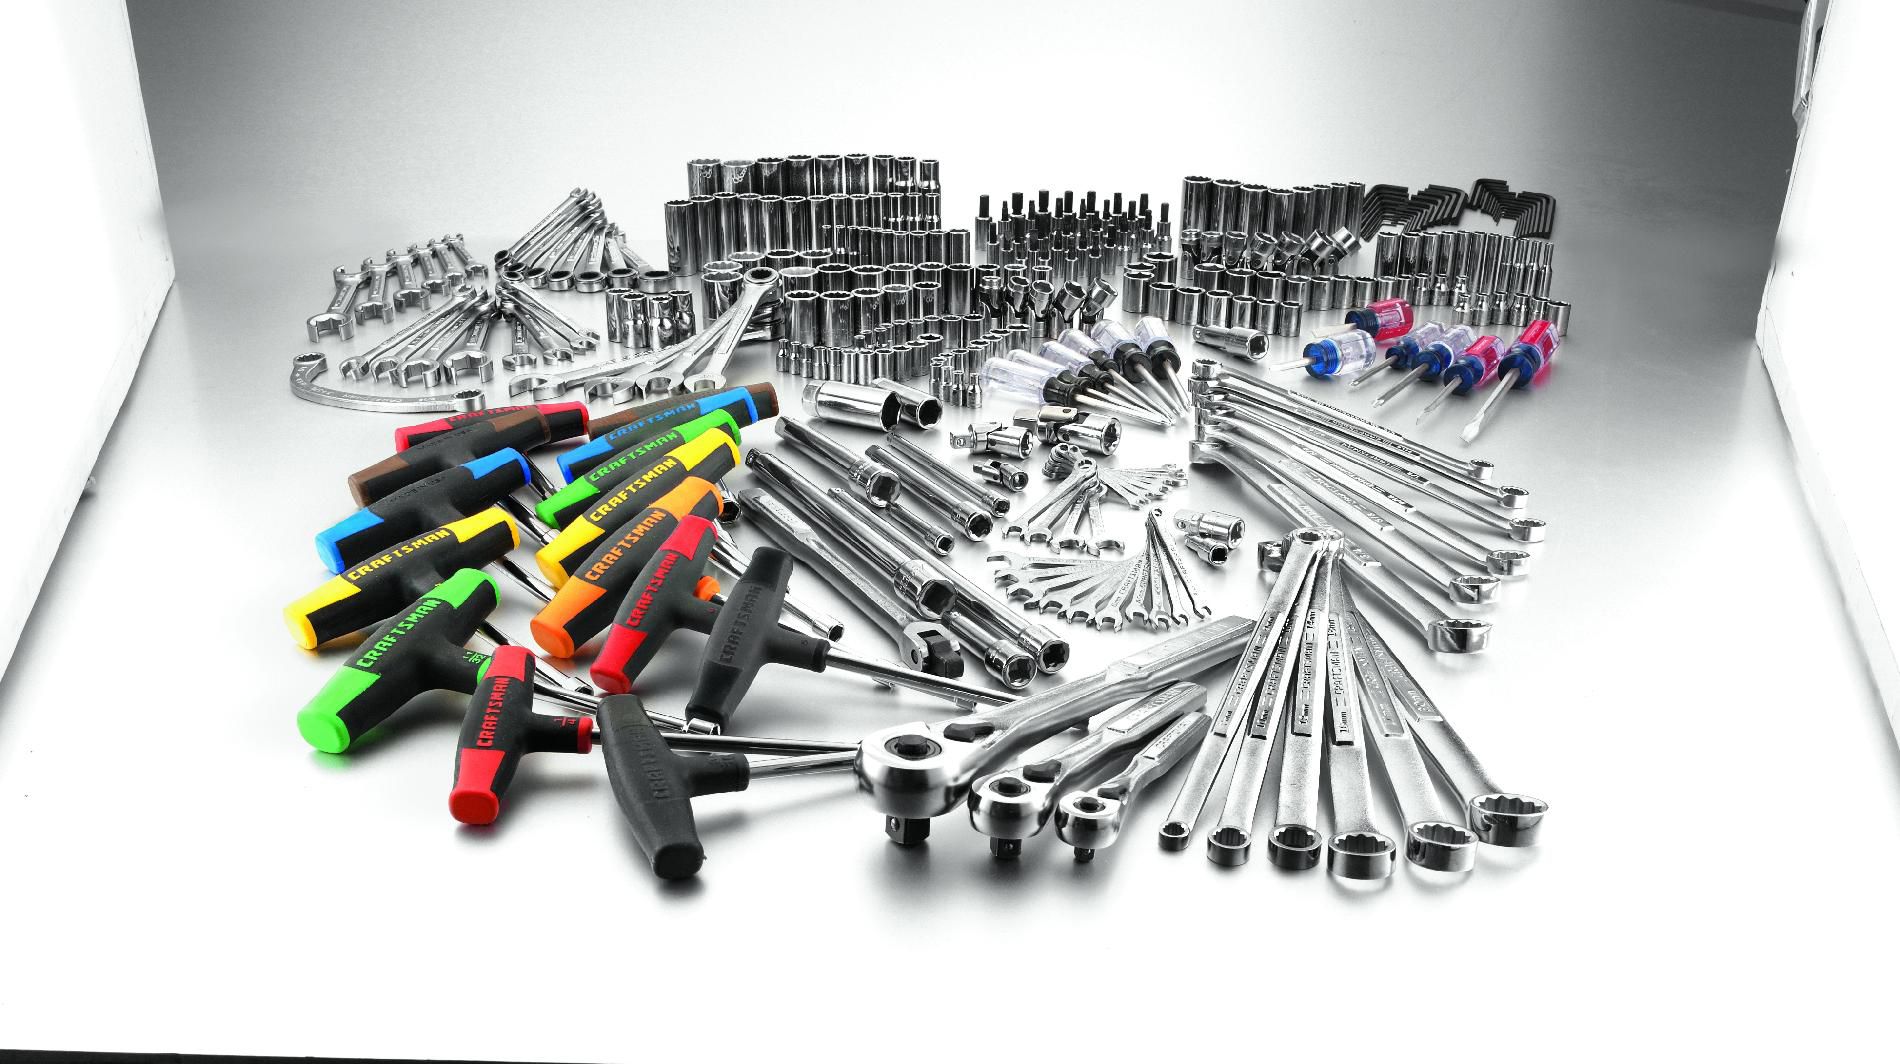 Craftsman 319pc Mechanics Tool Set w/ T-Handle Nut Drivers